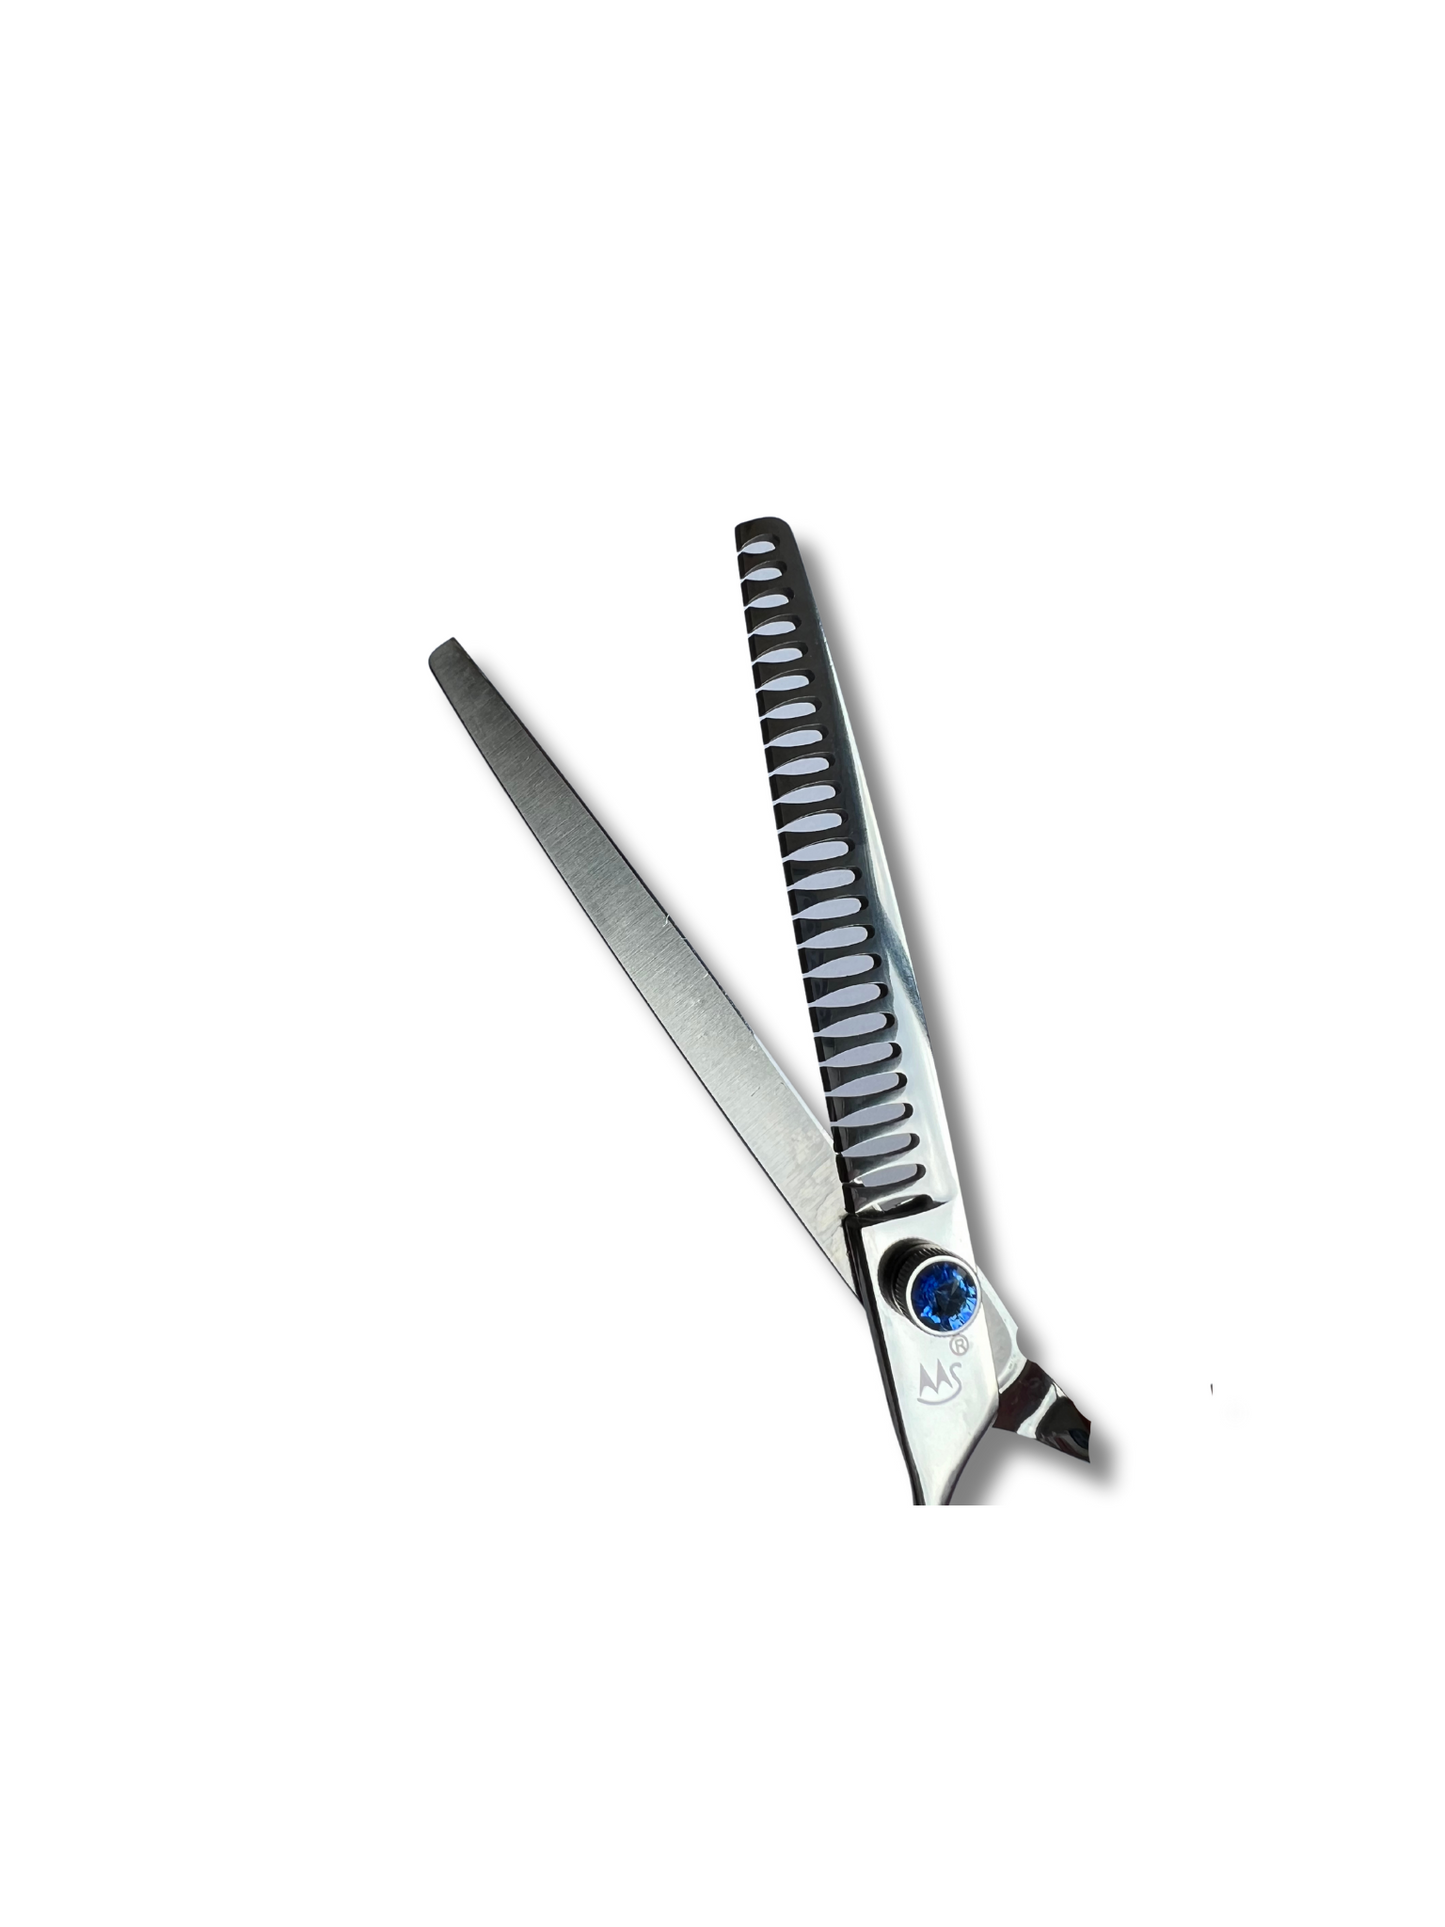 F2F-7524 professional straight thinning scissor 7.5" 24 teeth (LH)